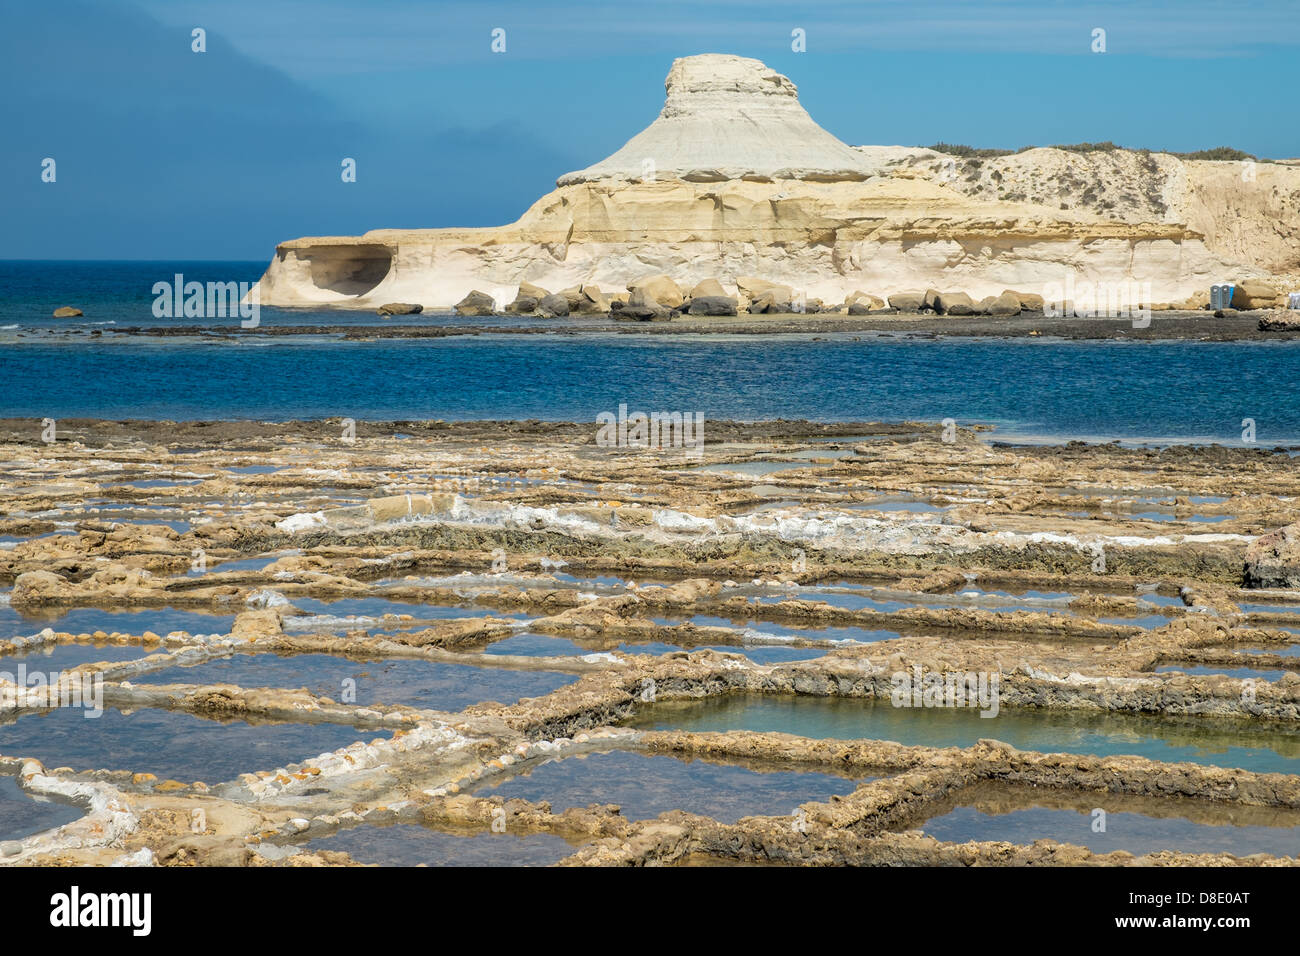 Salt pans at Marsalforn on the Island of Gozo. Taken in mid morning sunlight Stock Photo